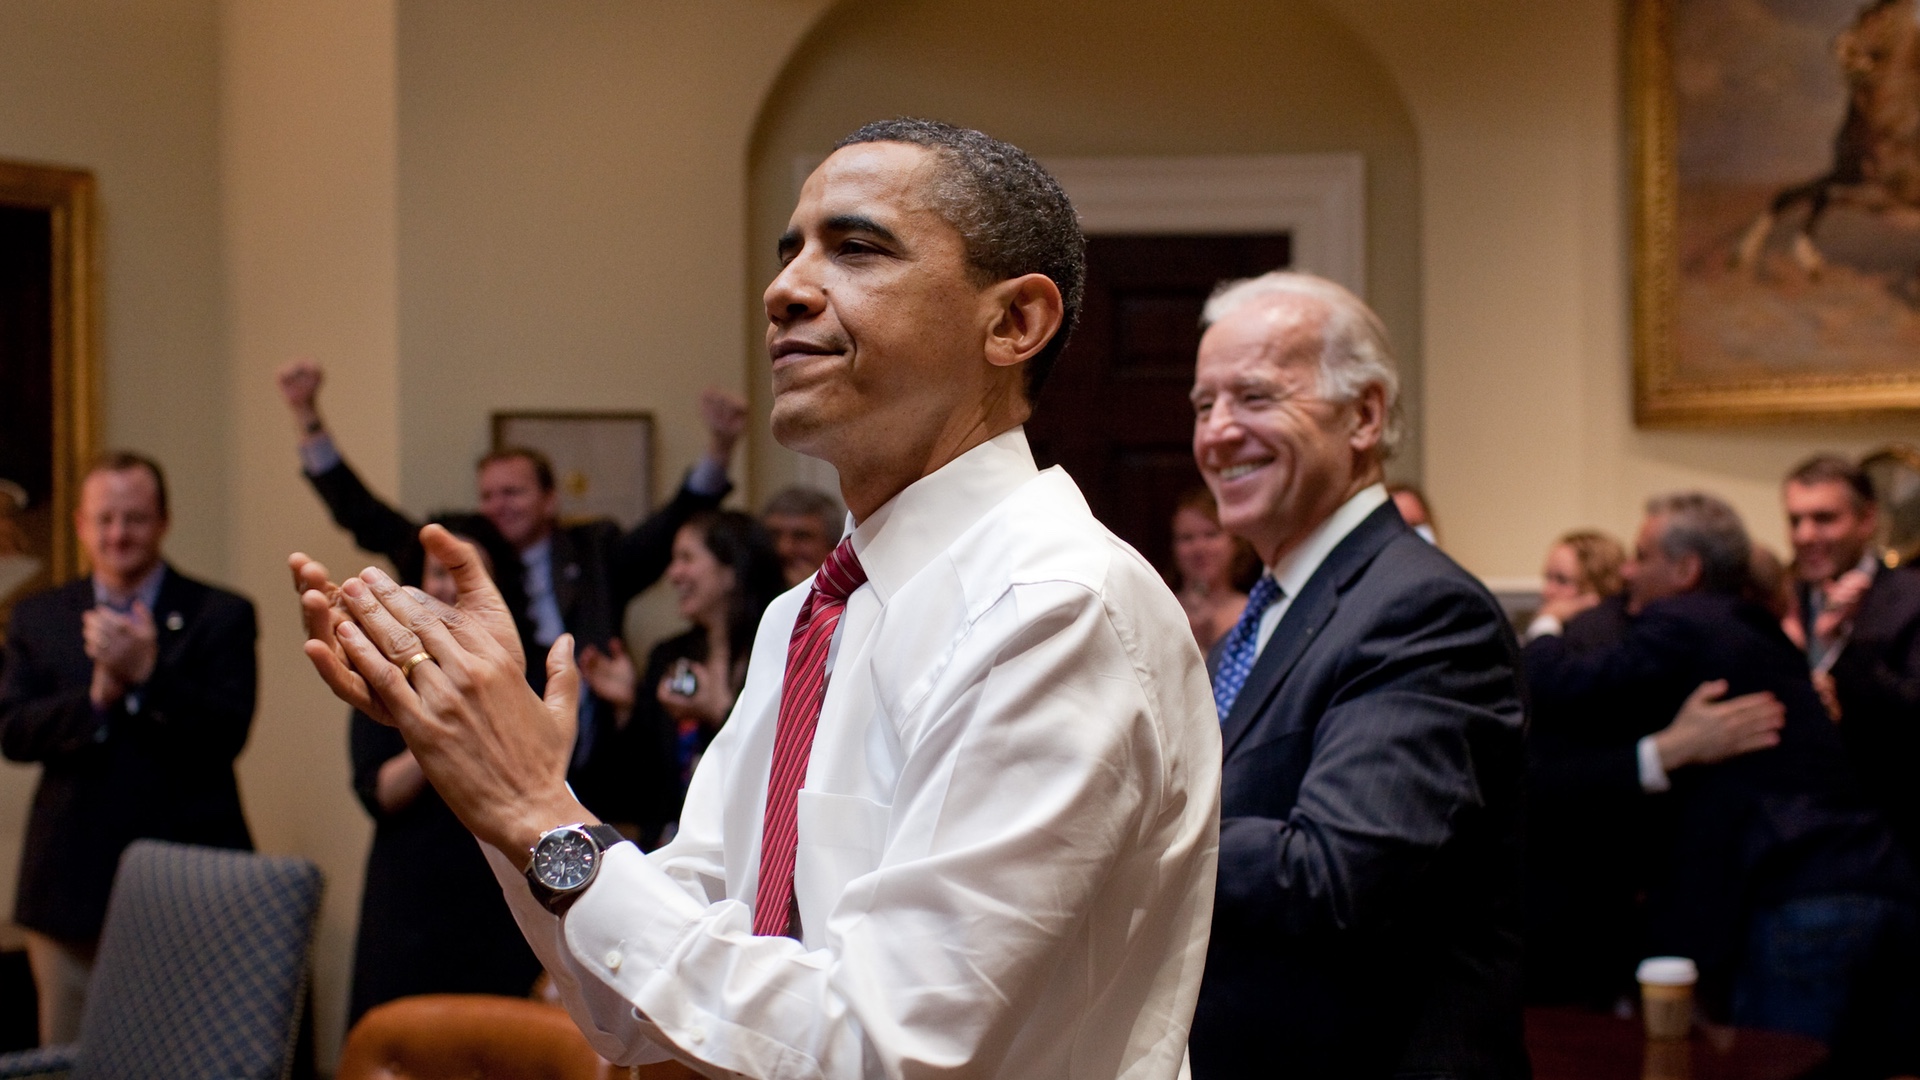 President Obama with Joe Biden in Roosevelt Room